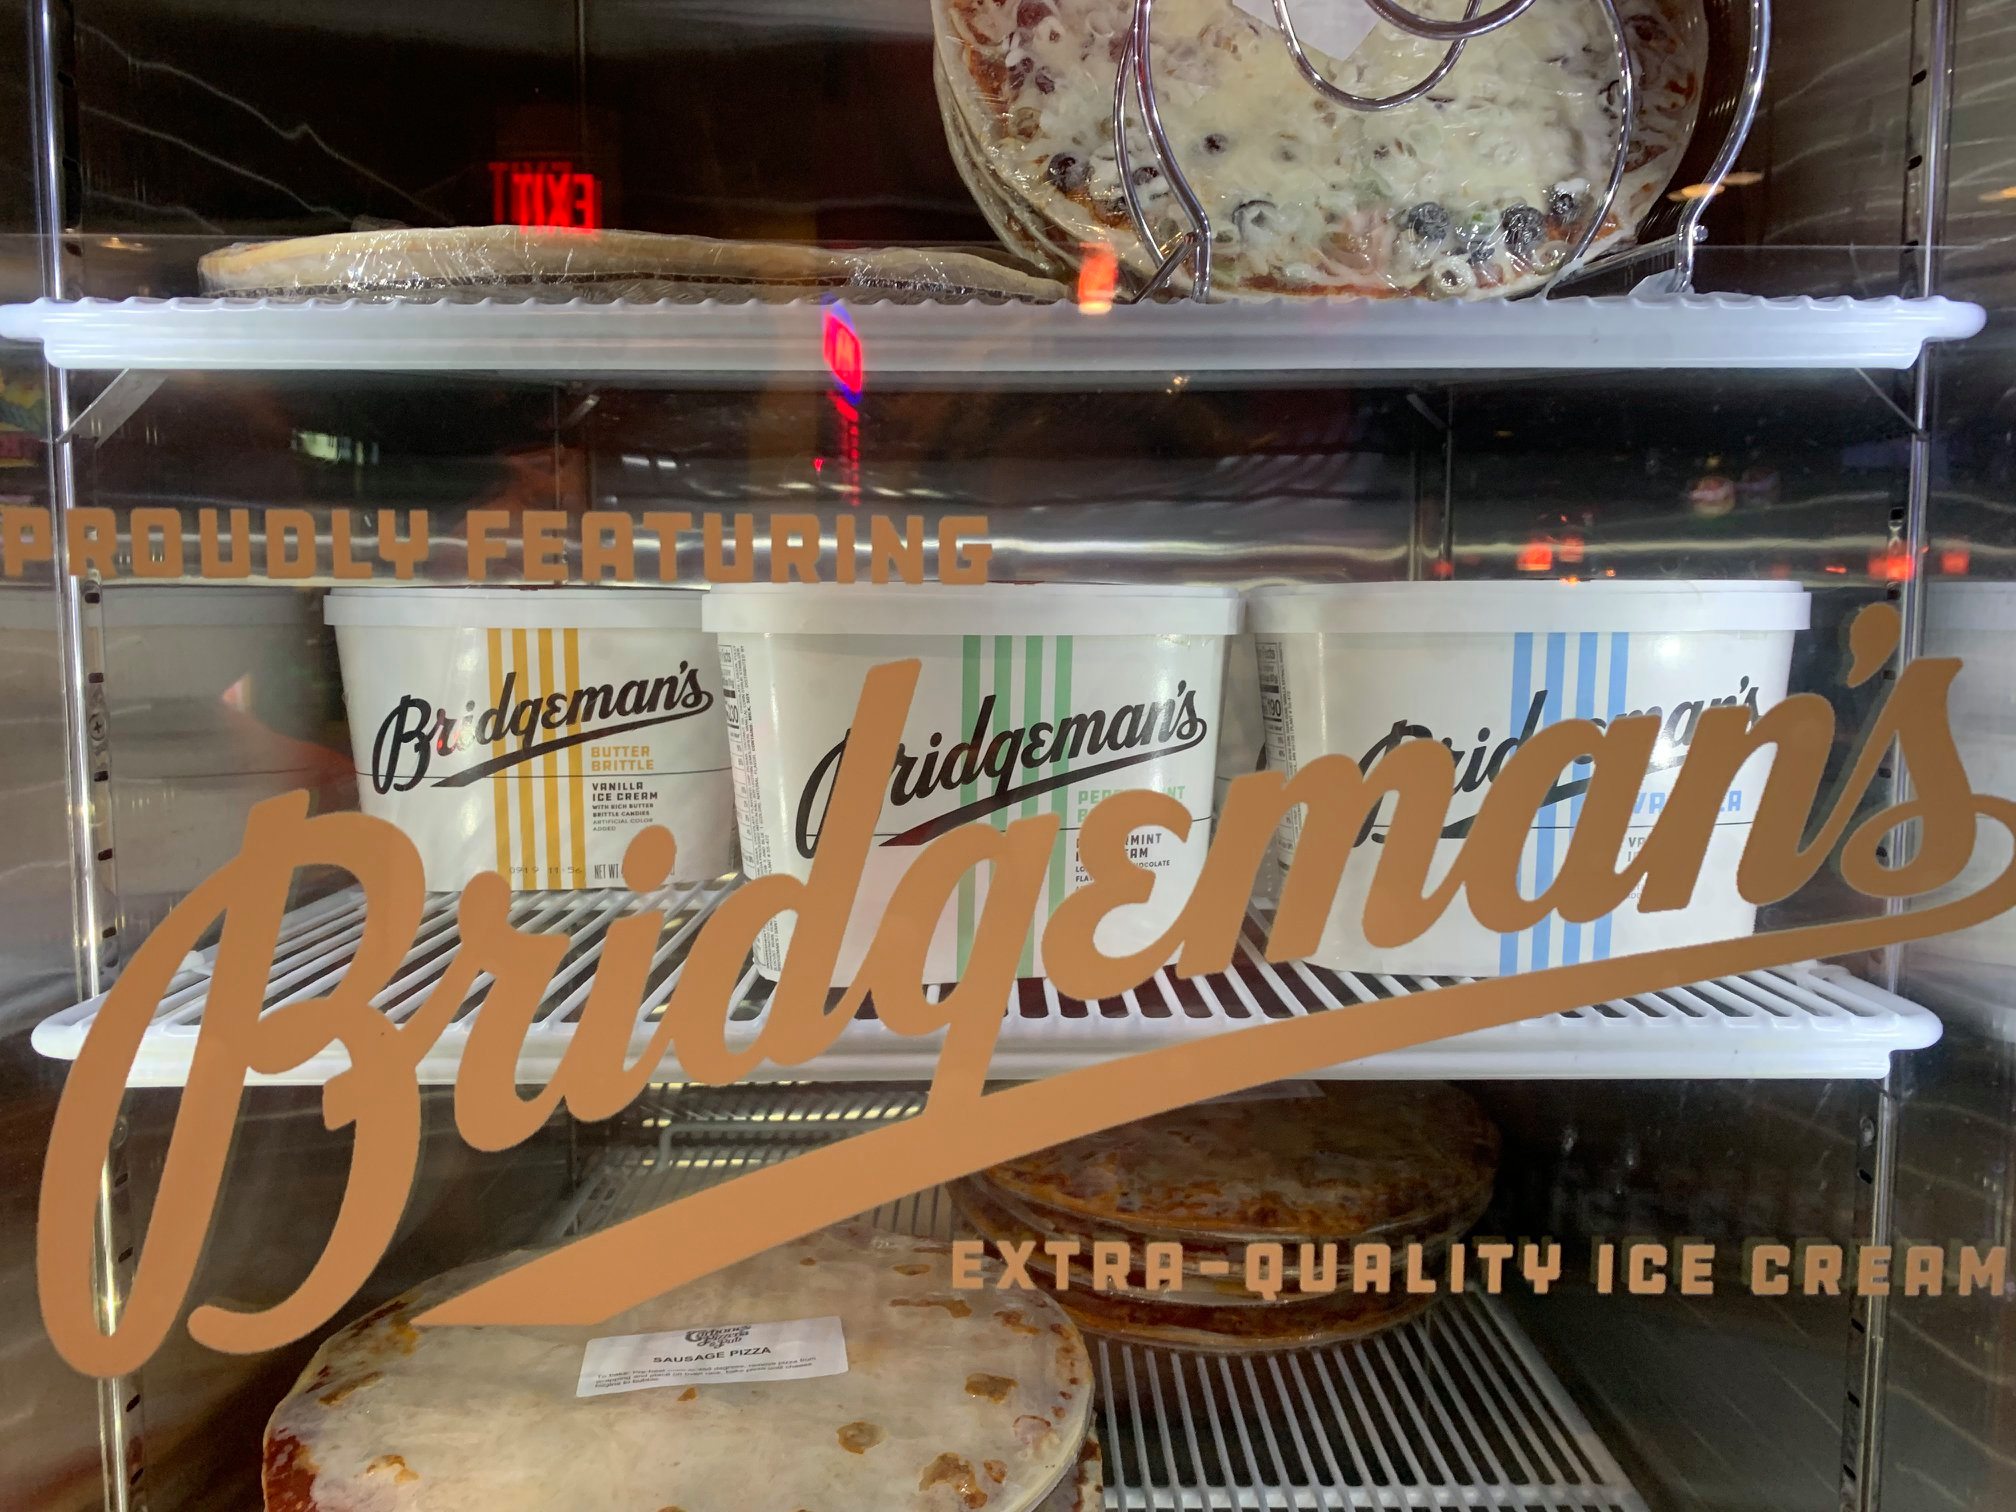 Carbone's Pizza and Bridgeman's Ice Cream